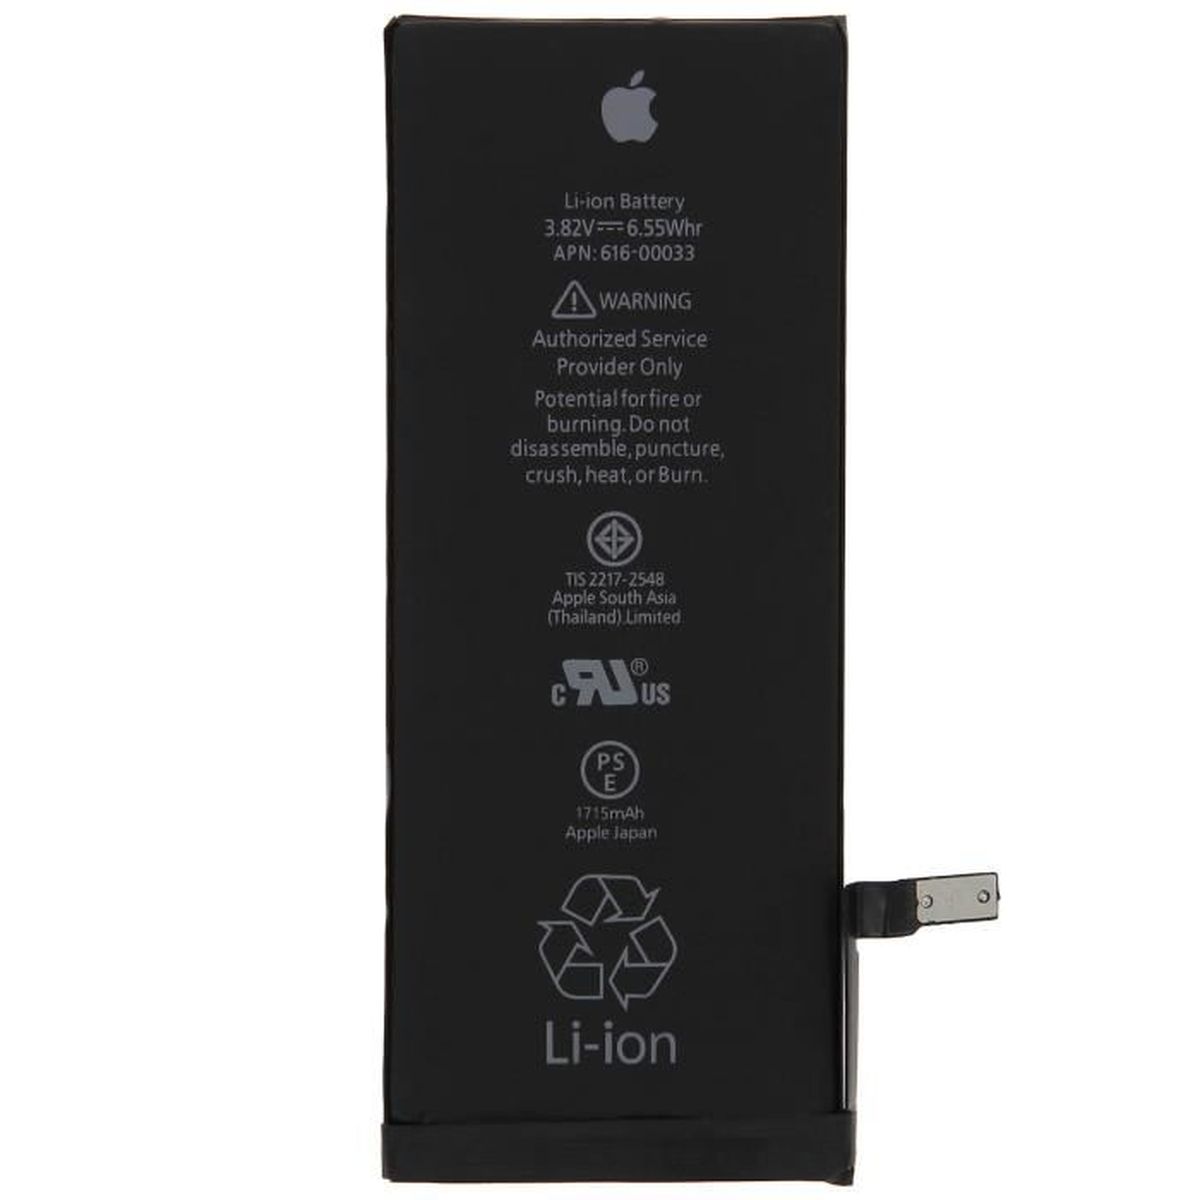 Batterie D Origine Apple Iphone 6s Apple 616 00033 1715mah